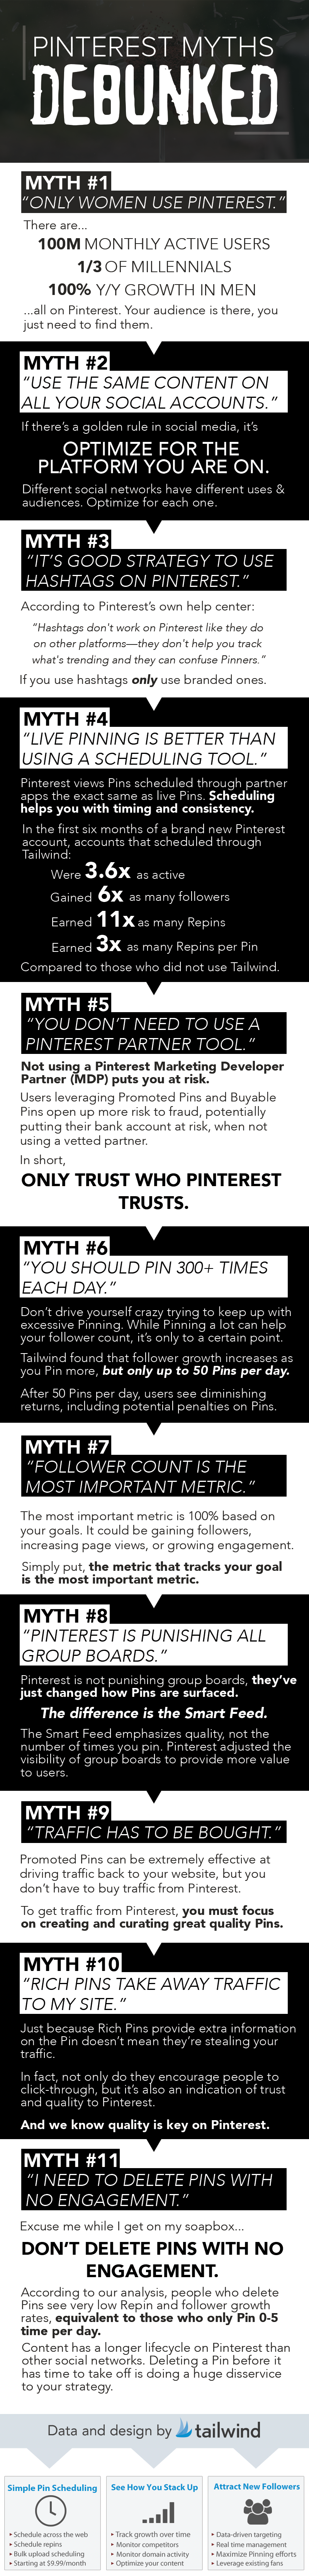 11 Pinterest Myths Debunked